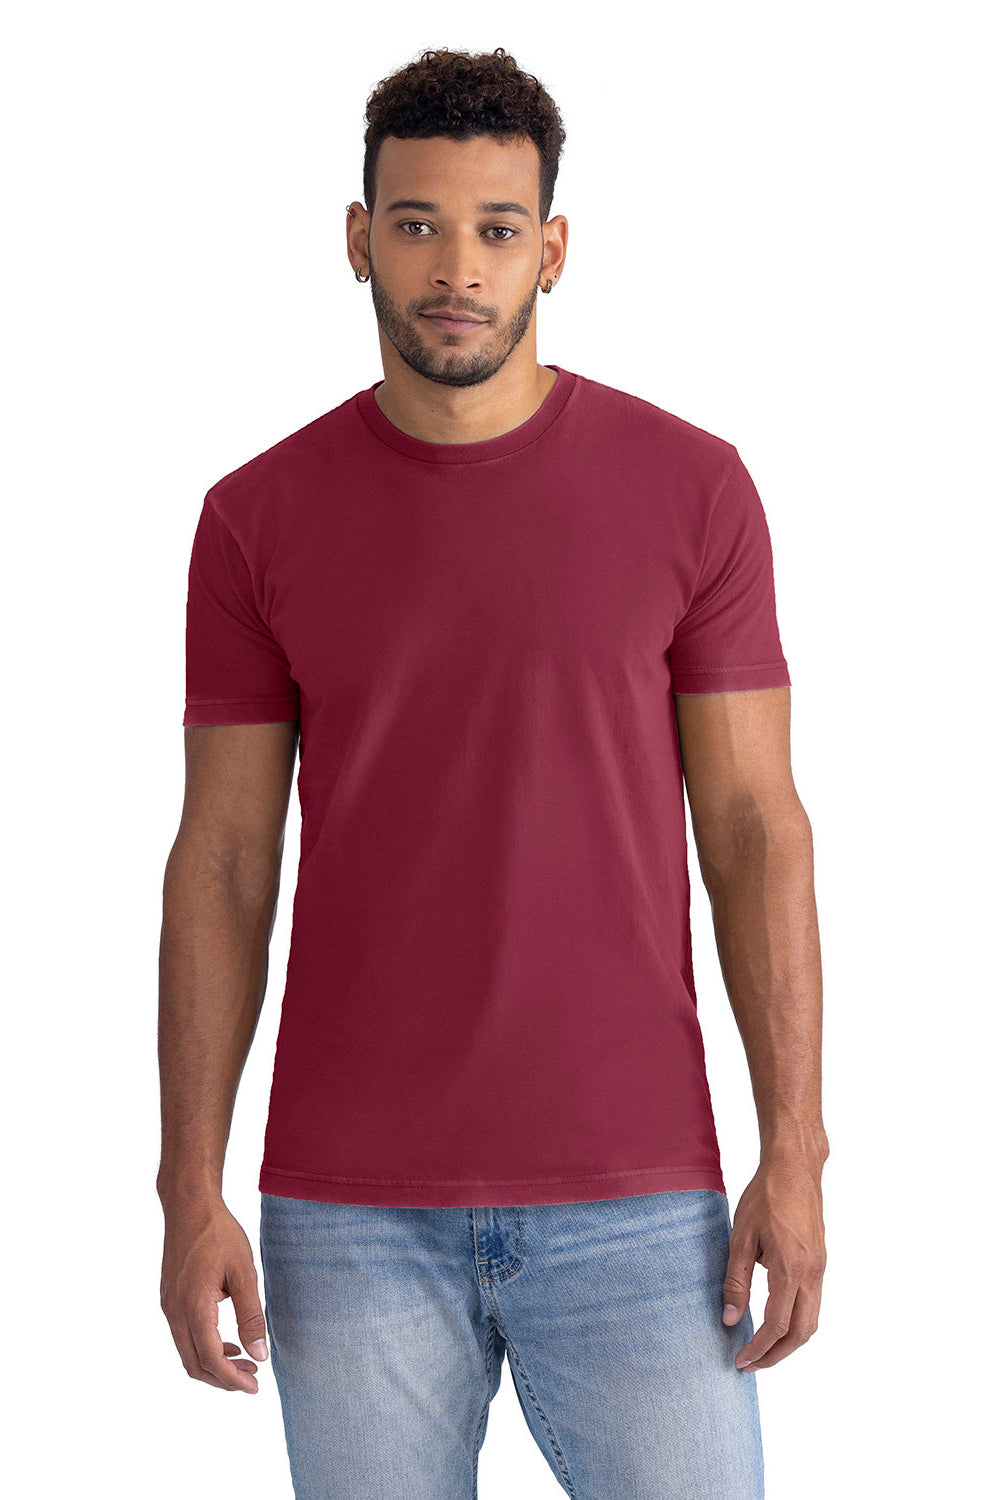 Next Level 3600SW Mens Soft Wash Short Sleeve Crewneck T-Shirt Cardinal Red Front